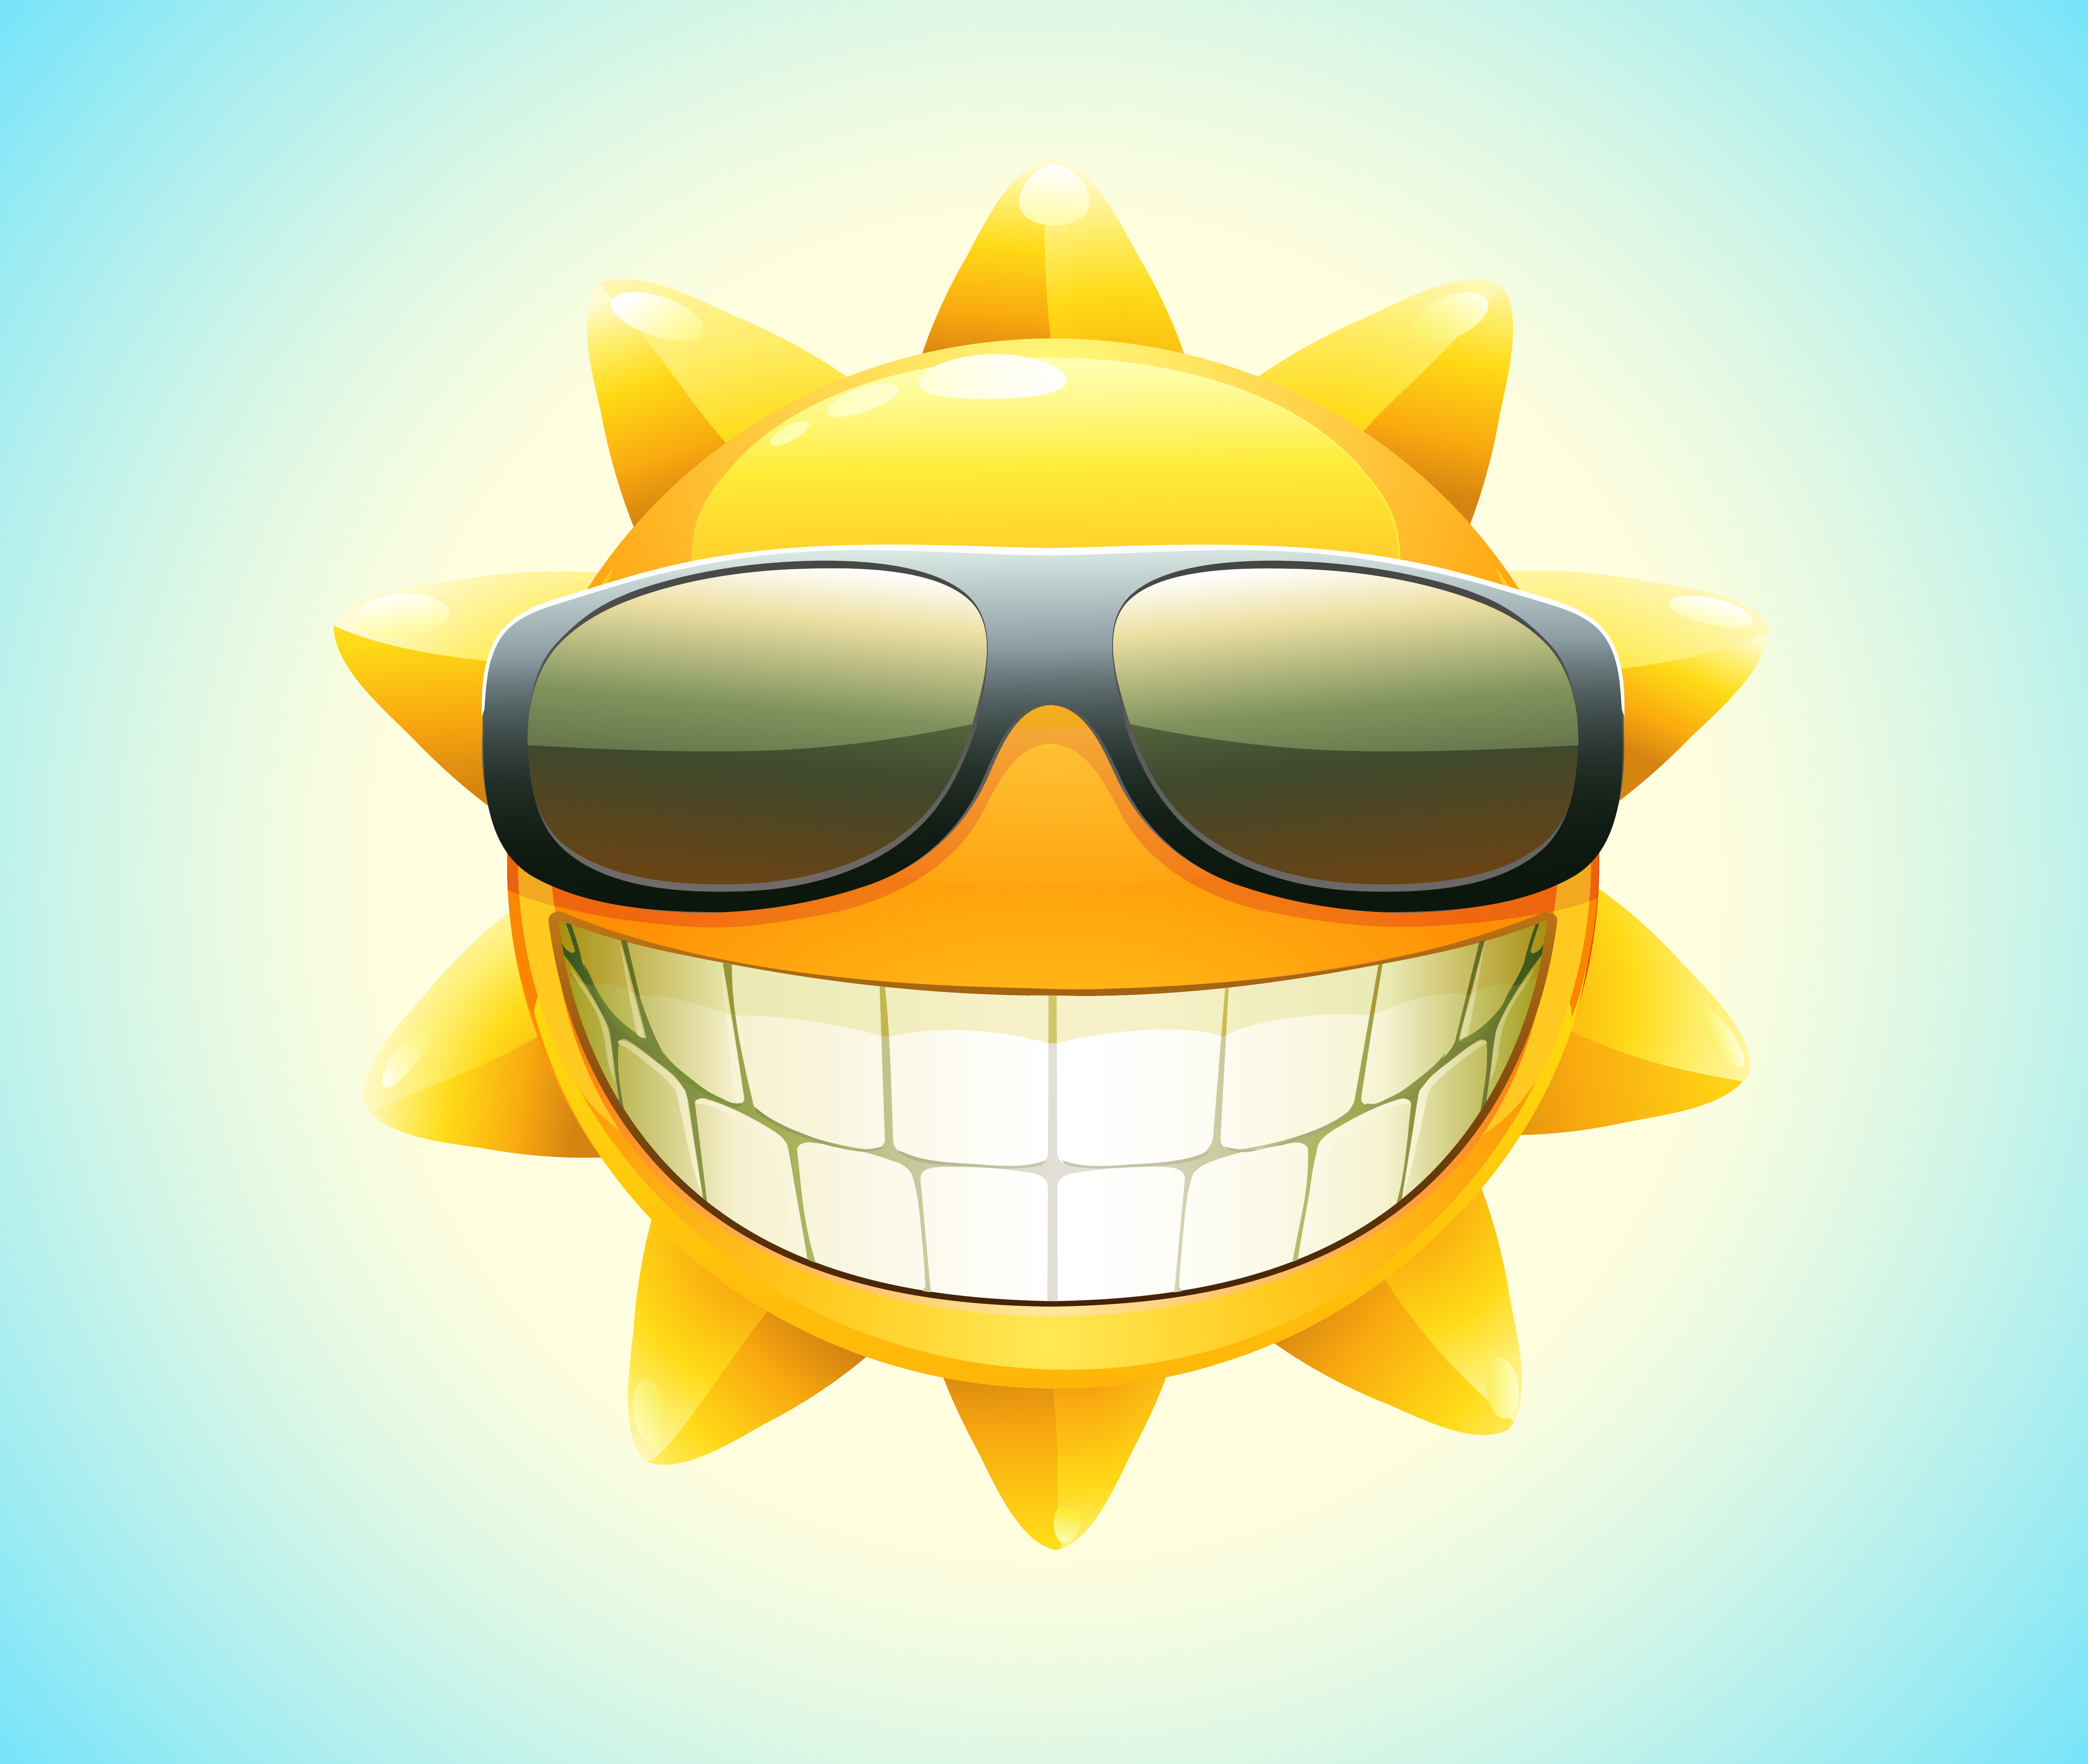 istock_sun_with_sunglasses.jpg